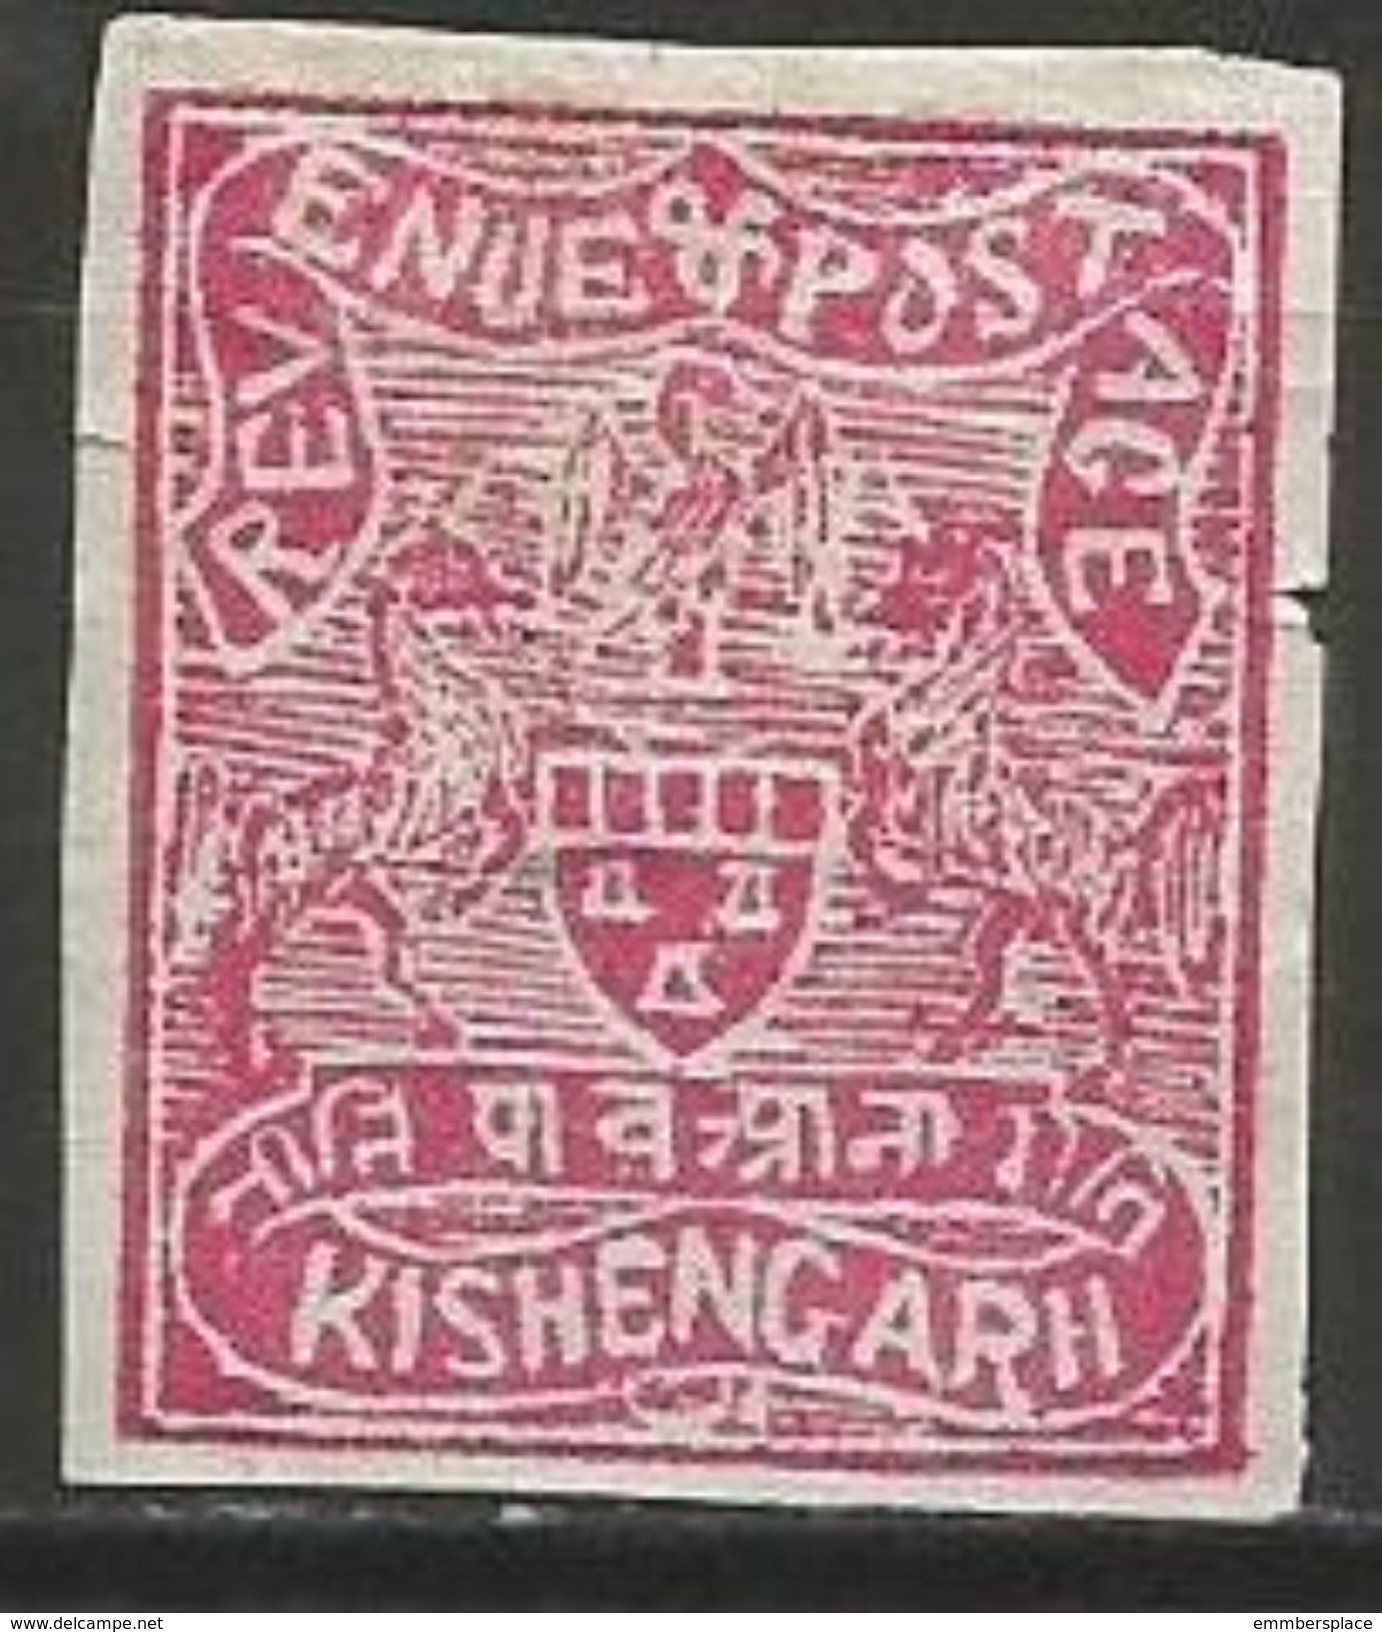 Kishengarh  - 1899 Issue Unused No Gum (as Issued) Imperf  SG 6 - Kishengarh